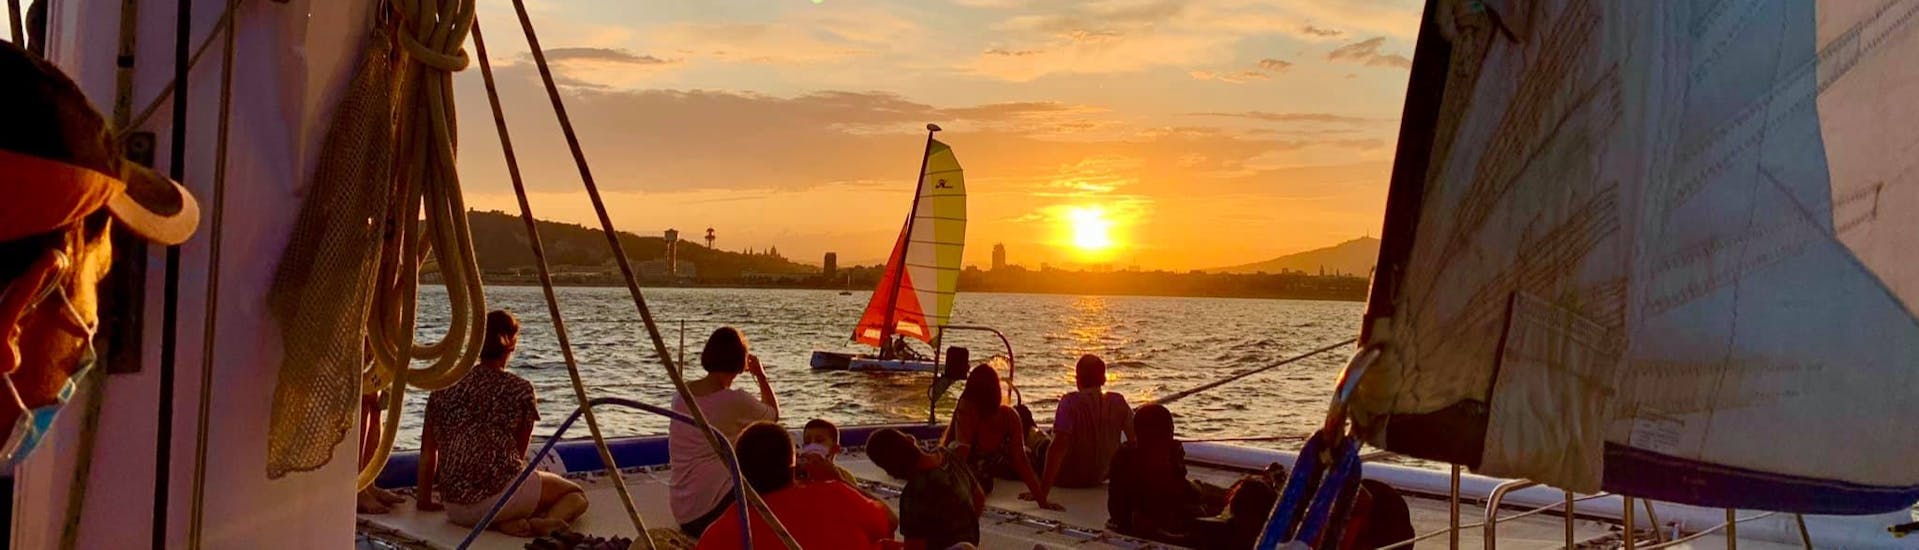 People enjoying a sunset during a Sunset Catamaran Trip around Barcelona with Catamaran Orsom Gotland Charter.